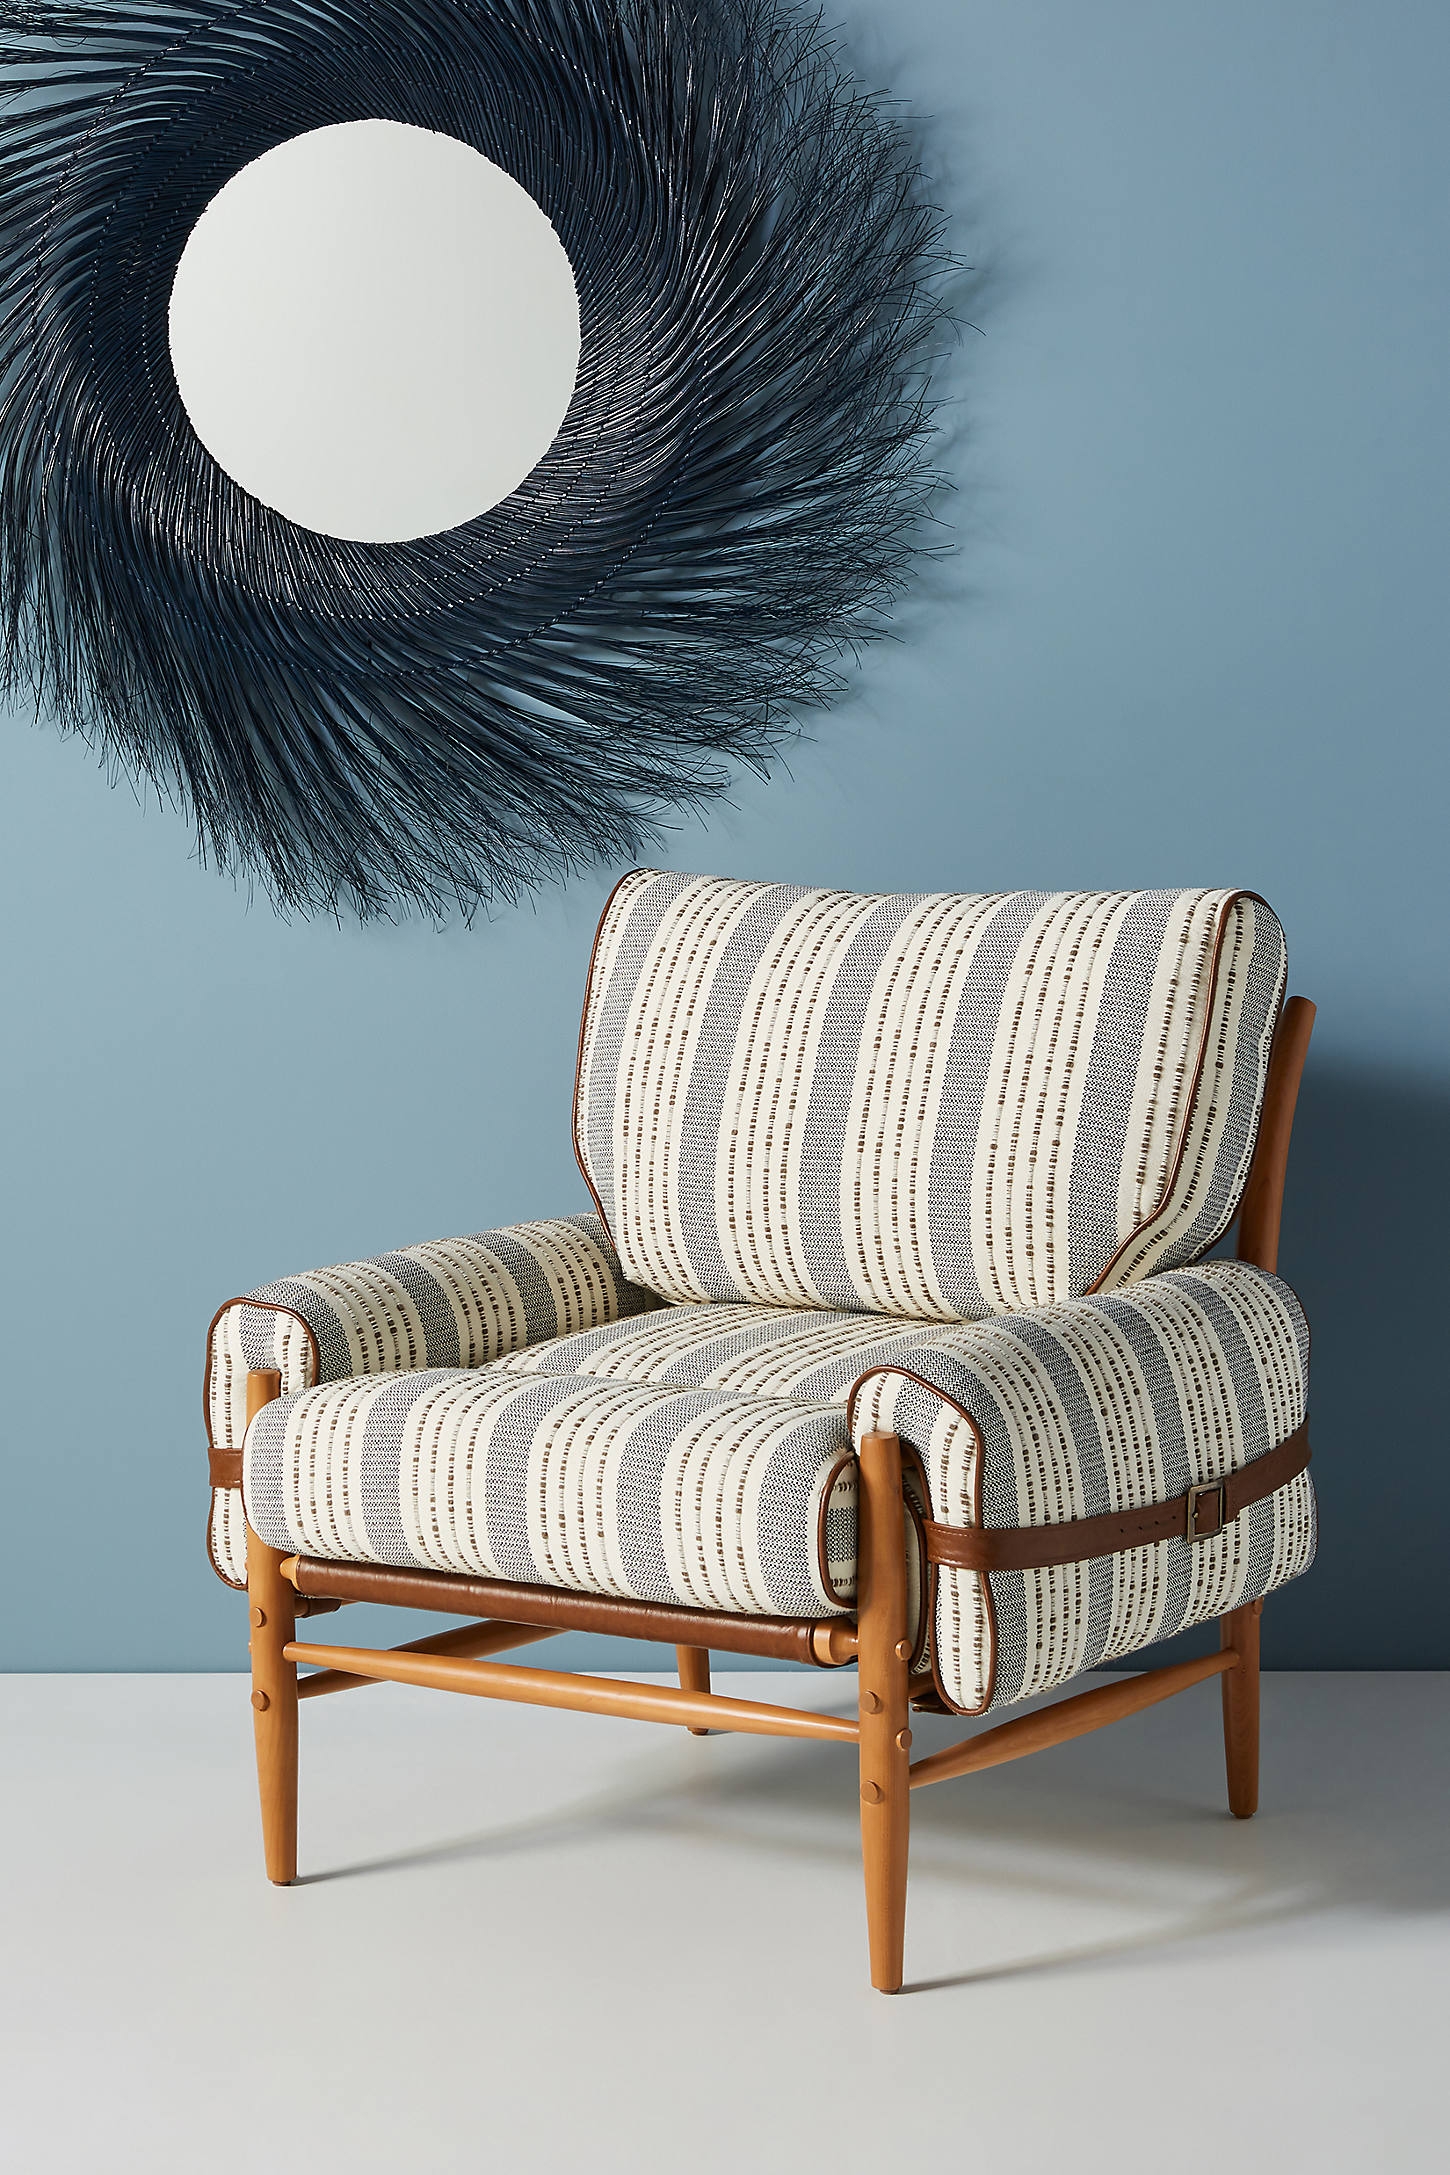 Striped Rhys Chair - Image 0